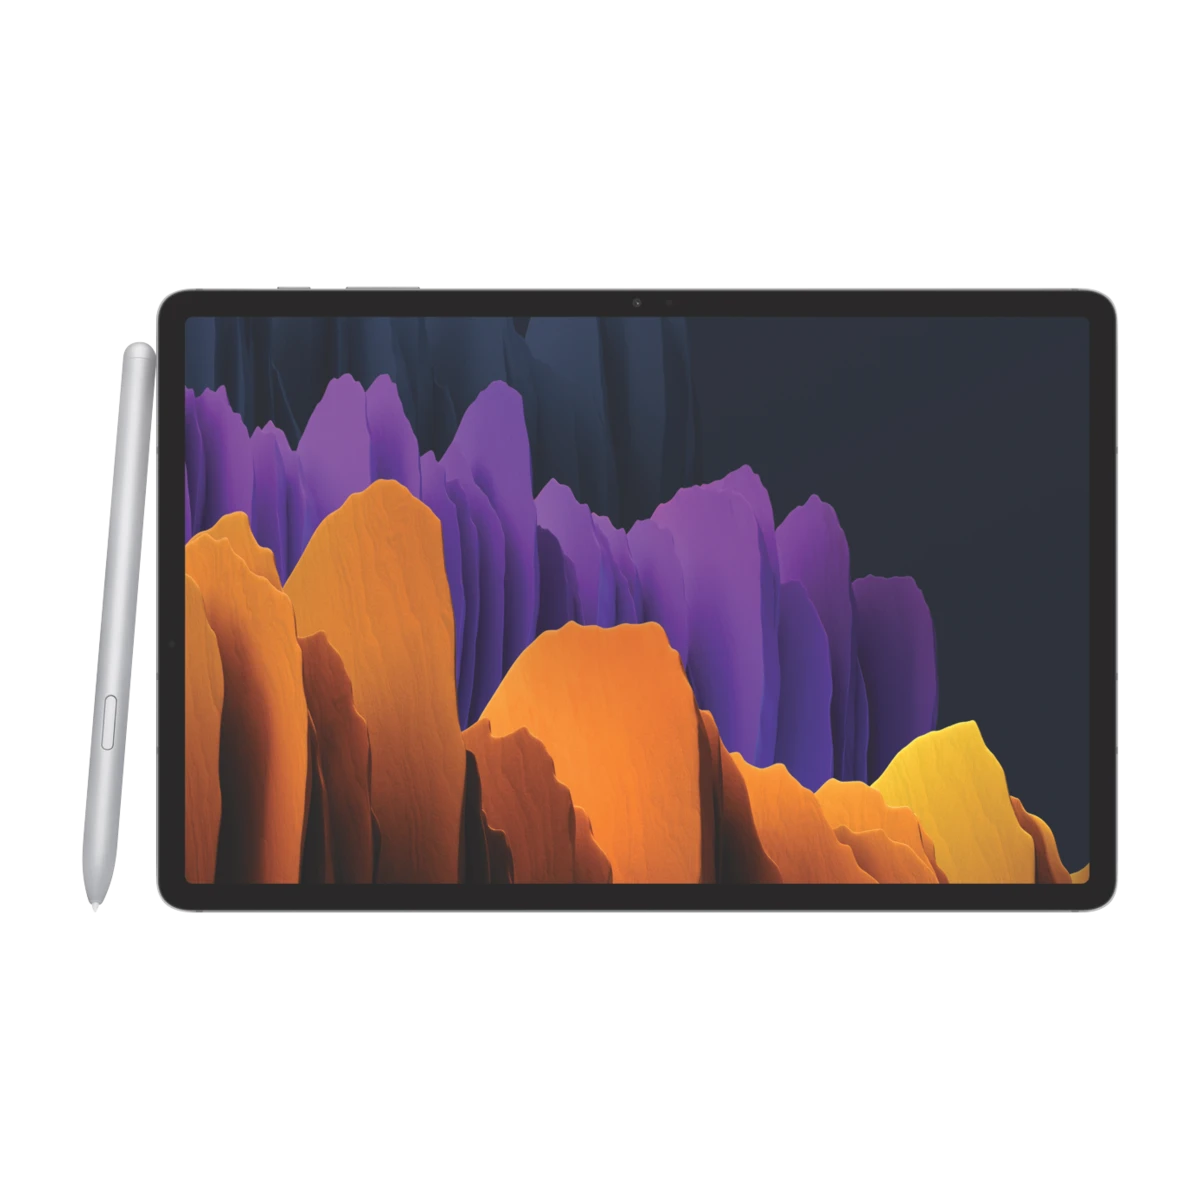 Samsung Galaxy Tab S7 Plus Screen Replacement / Repair